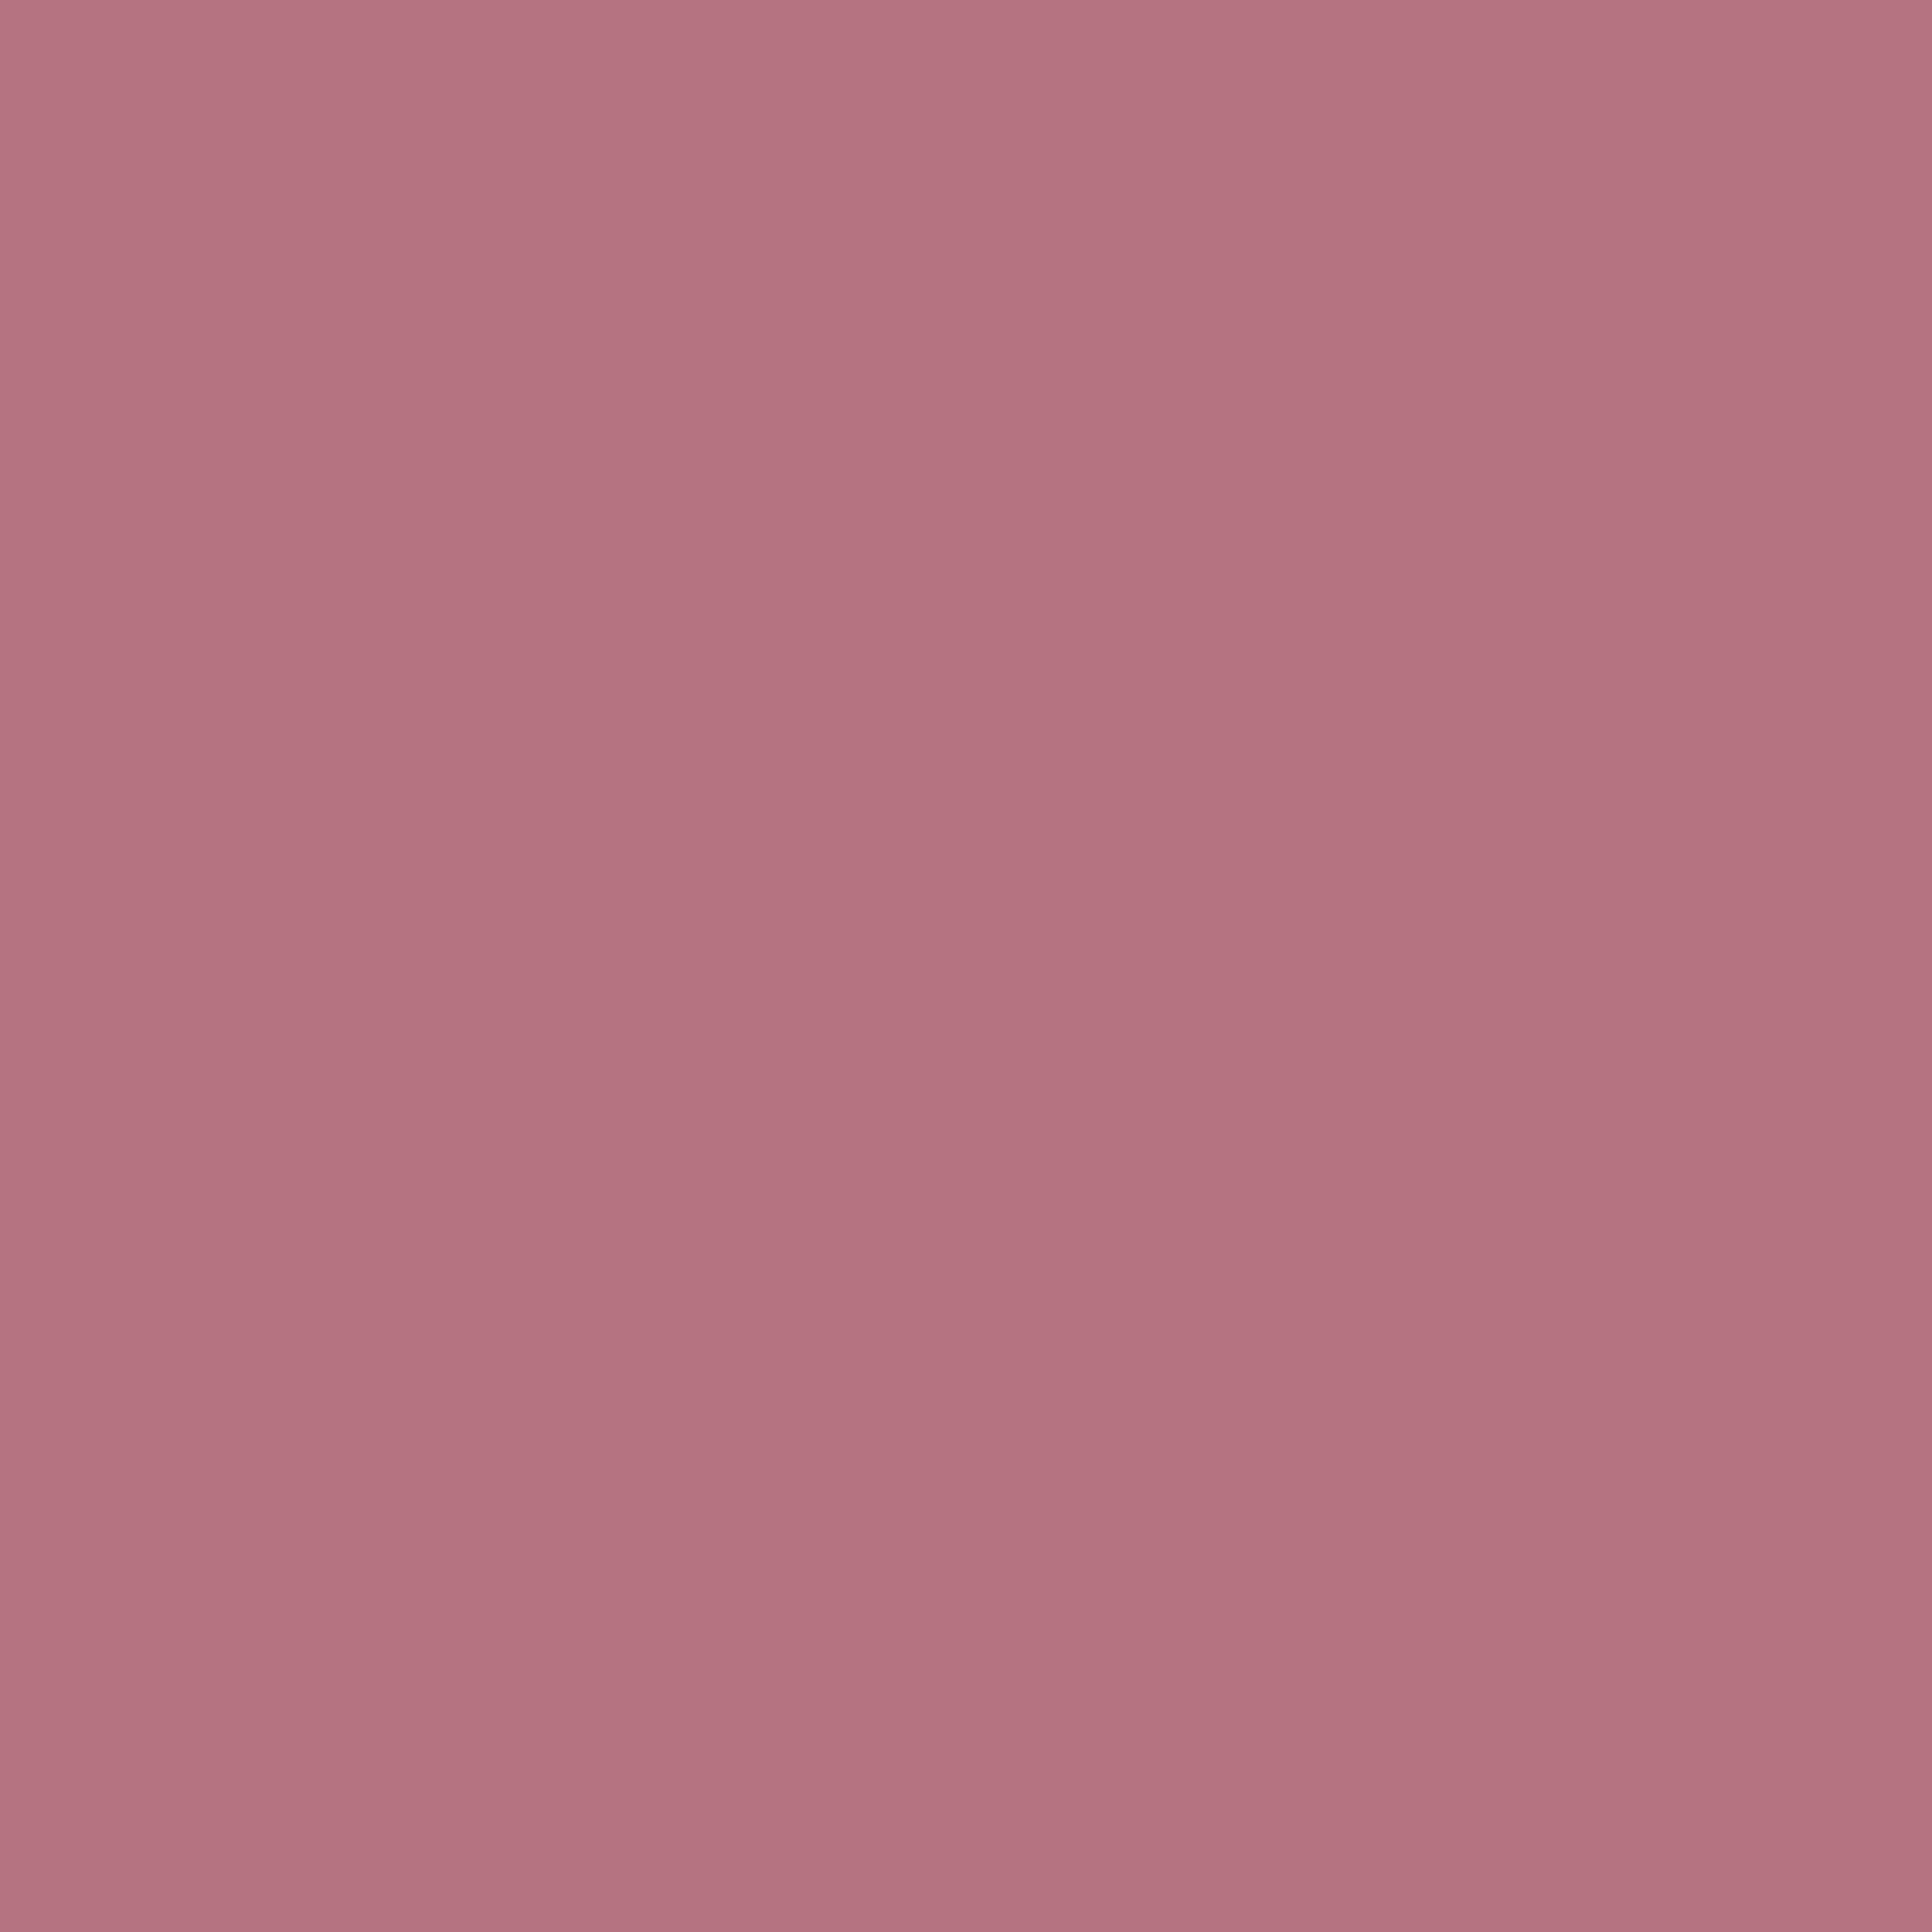 2732x2732 Turkish Rose Solid Color Background